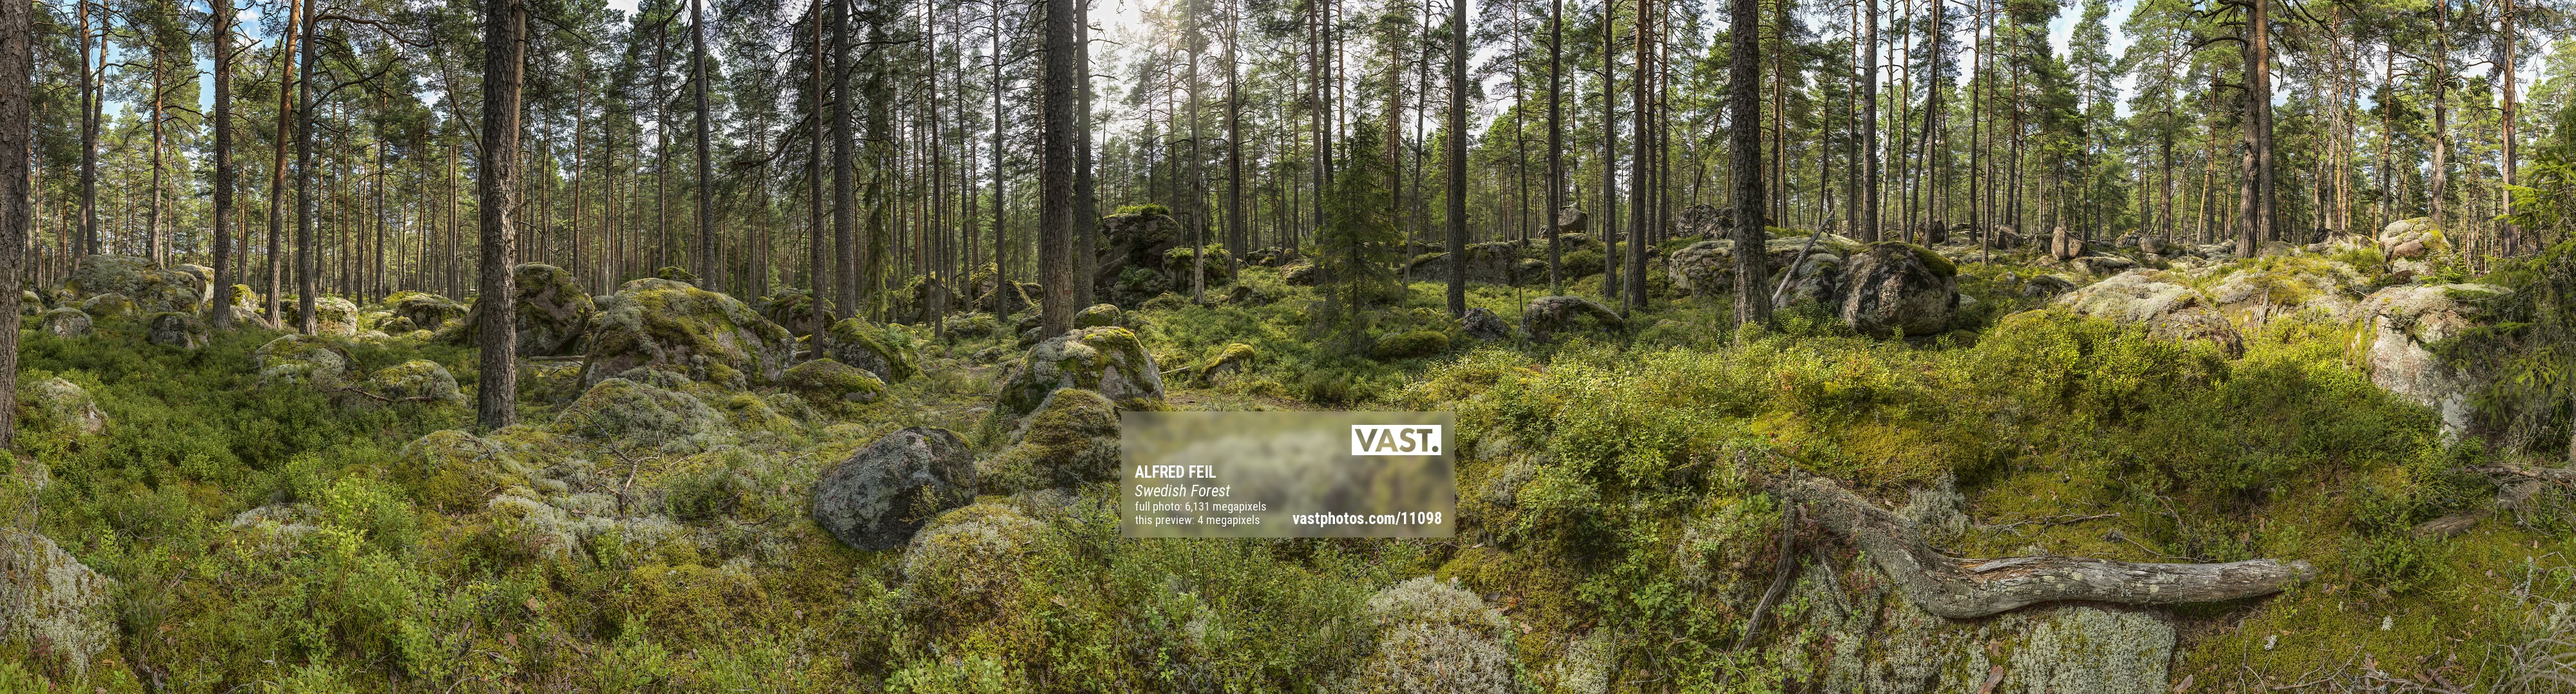 Ultra high resolution forest photos - VAST